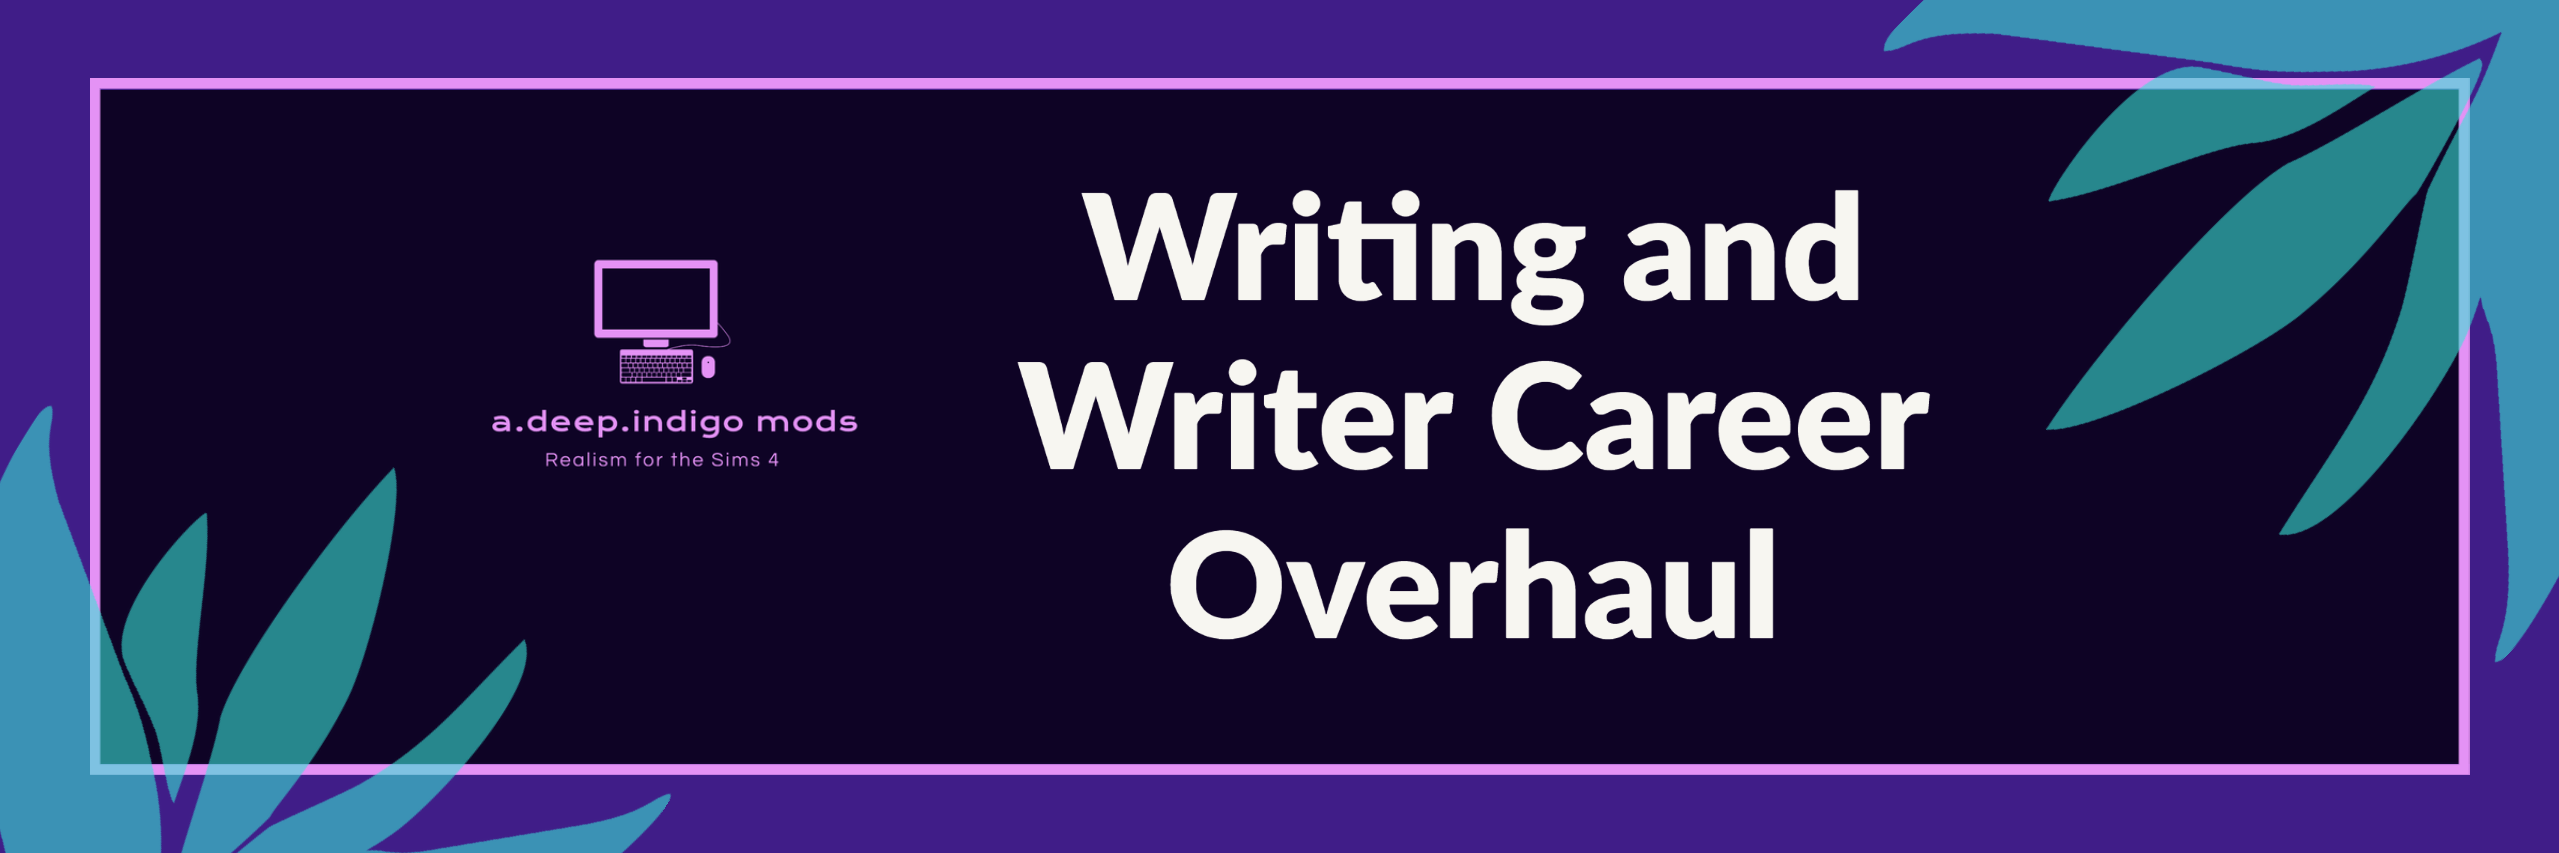 Writing and Writer Career Overhaul